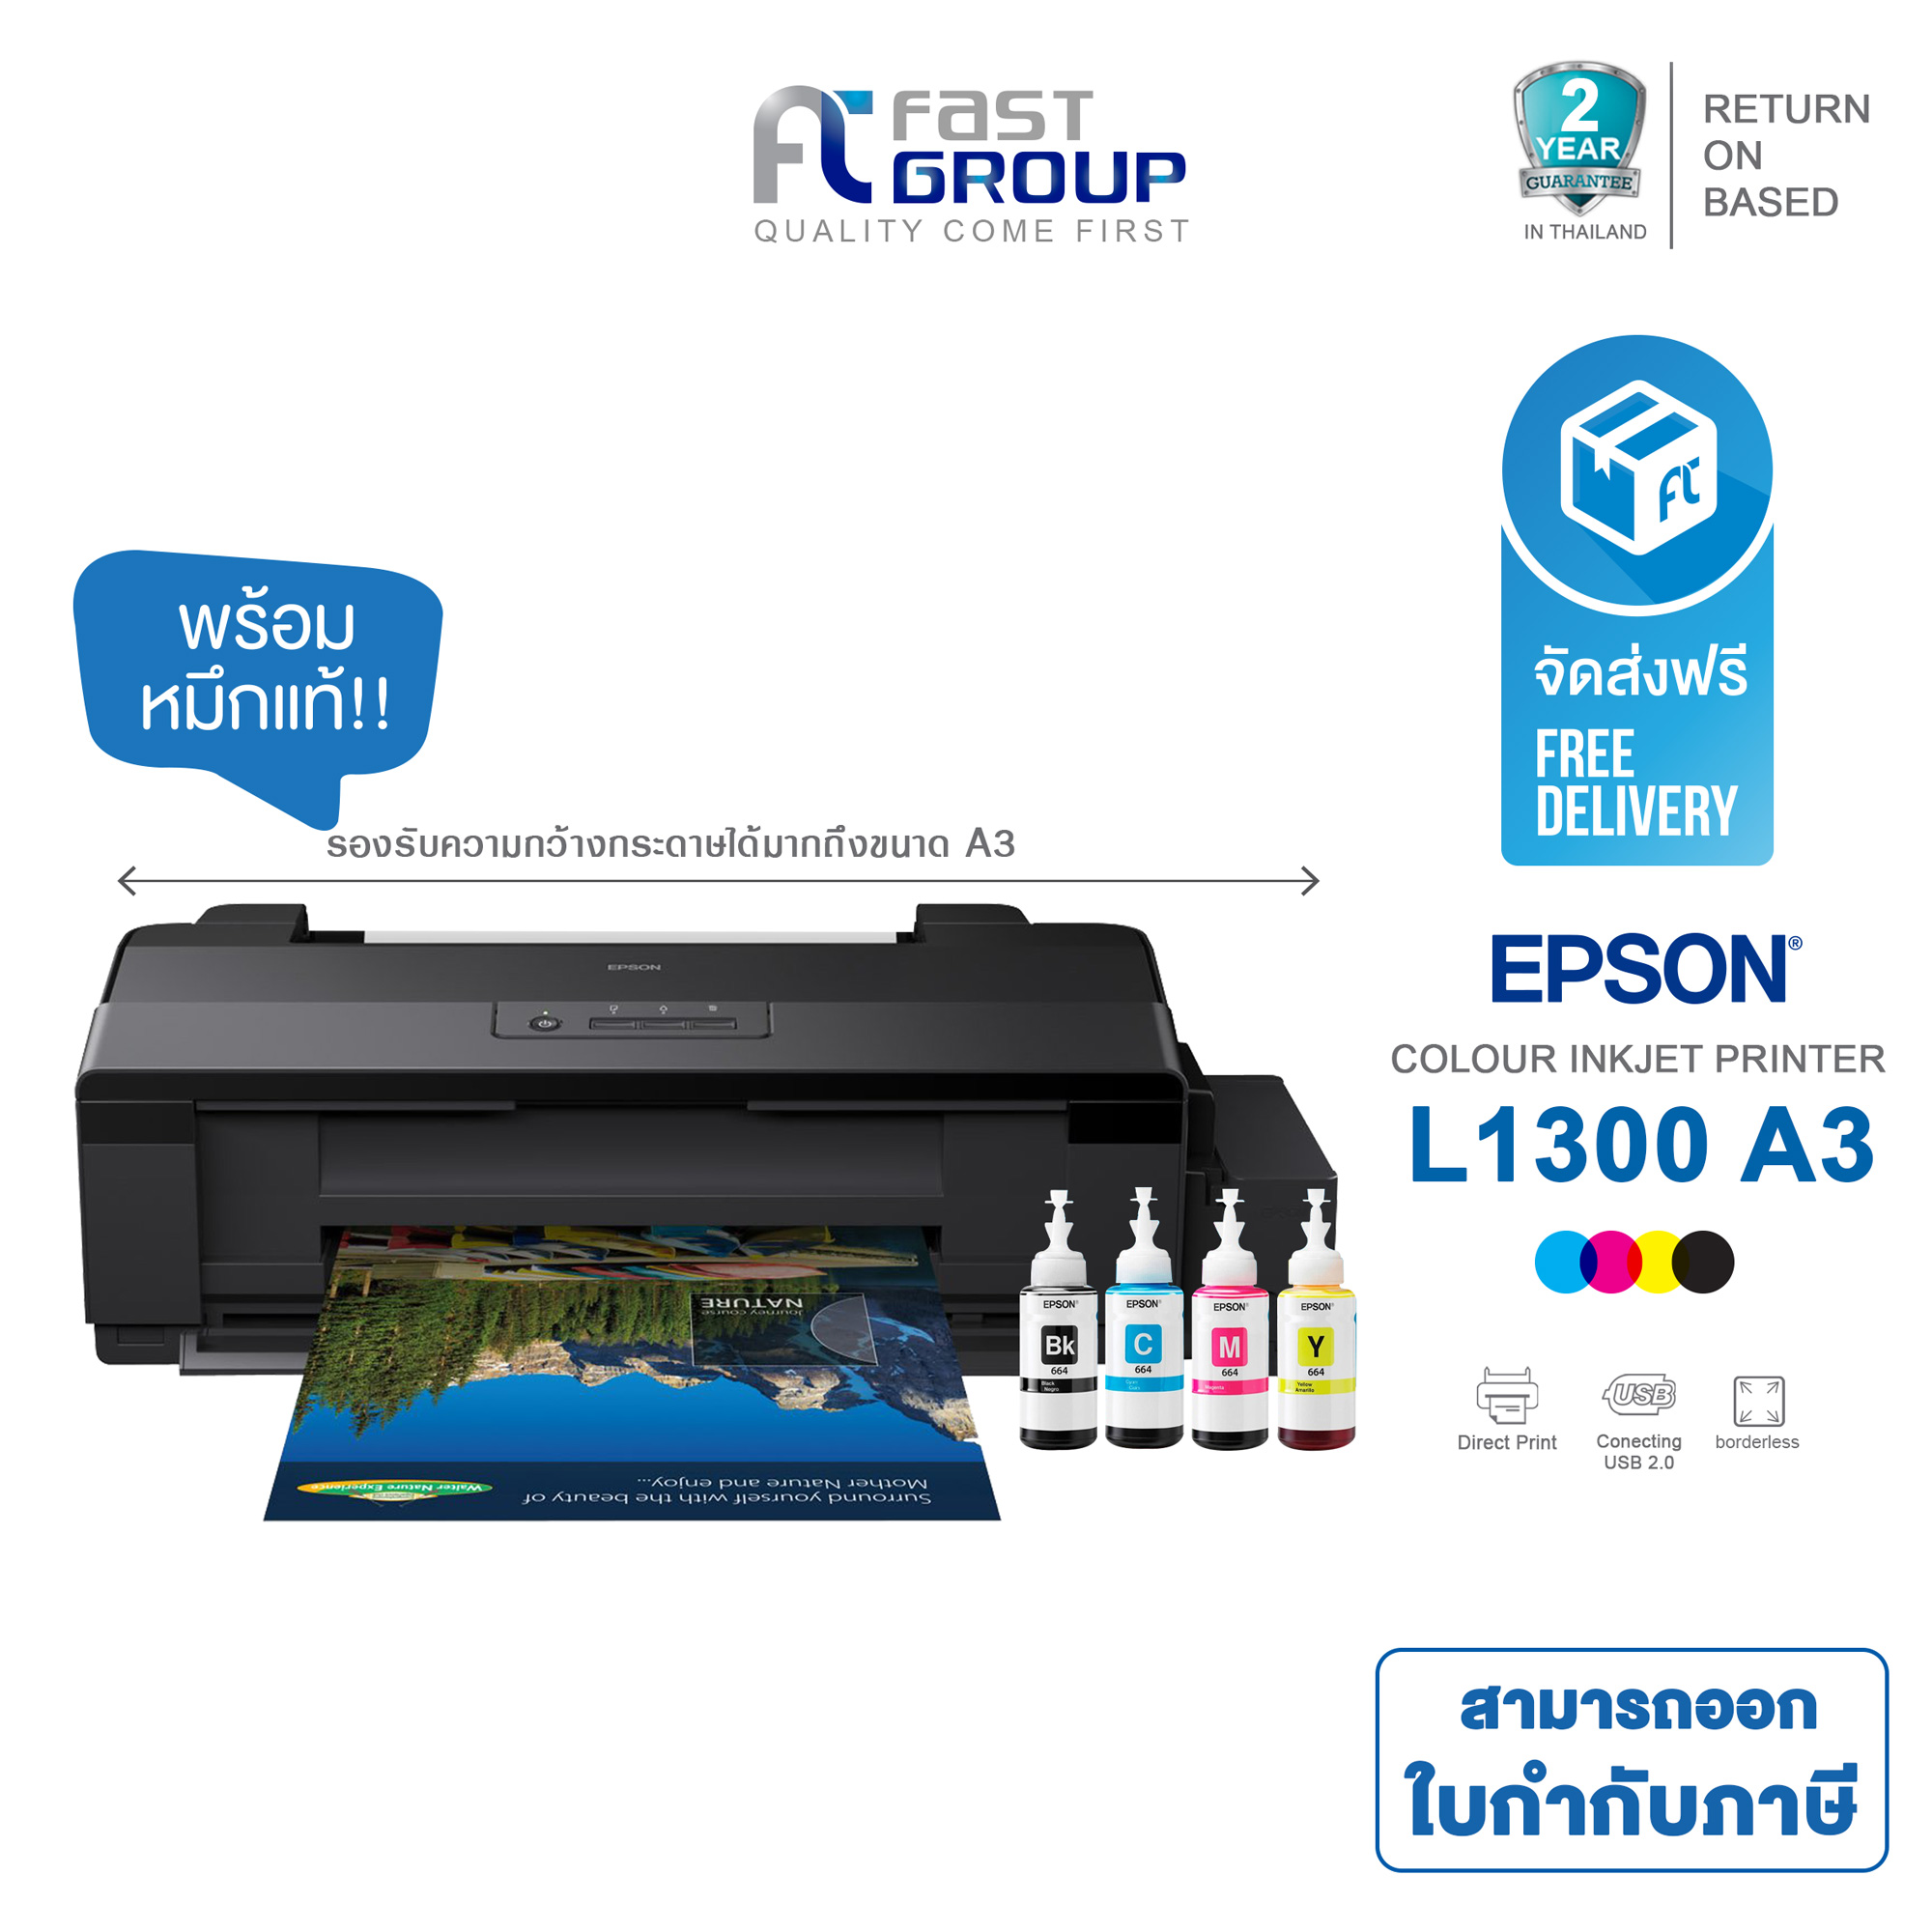 Epson L1300 A3 Ink Tank Printer เครื่องพิมพ์อิงค์เจ็ท ขนาด A3 โดย สยามทีวี By Siam Tv Mixasale 2615